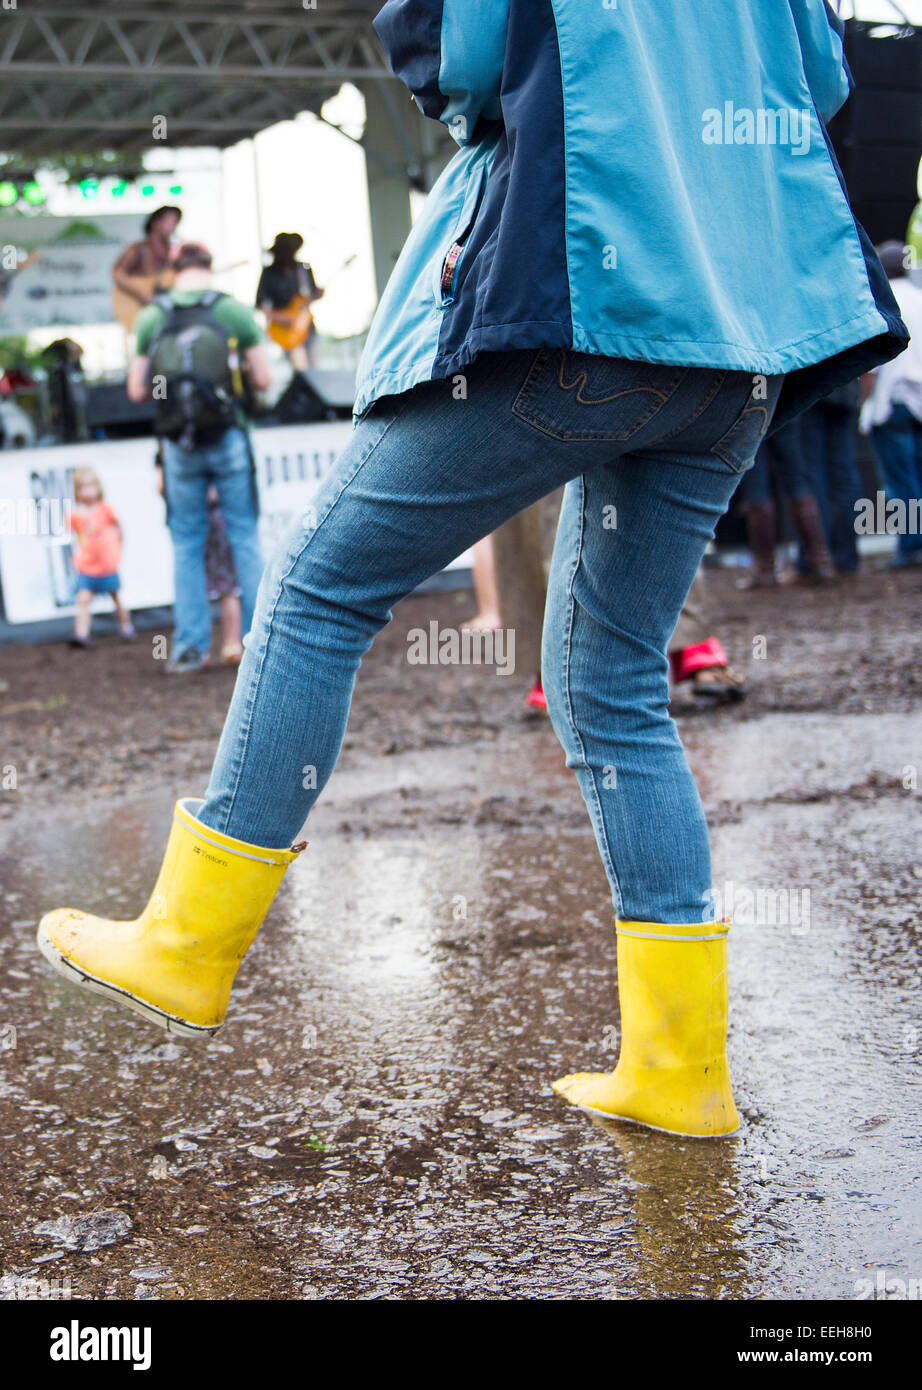 Yellow Rain Boots Stock Photos & Yellow Rain Boots Stock Images ...